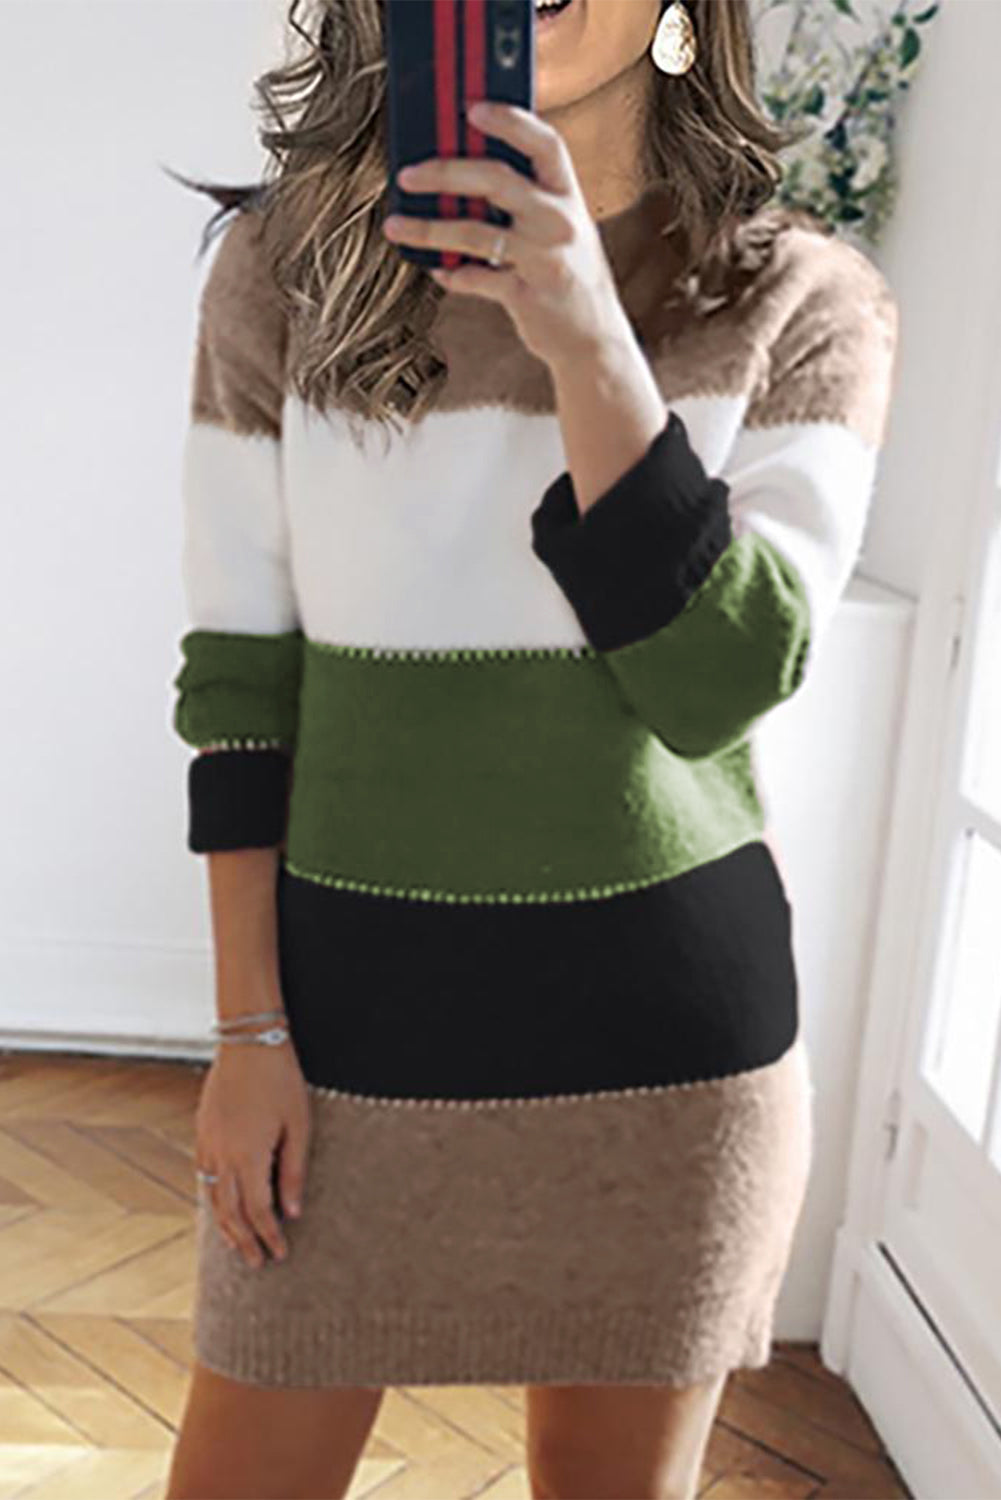 Black Color Block Sweater Dress